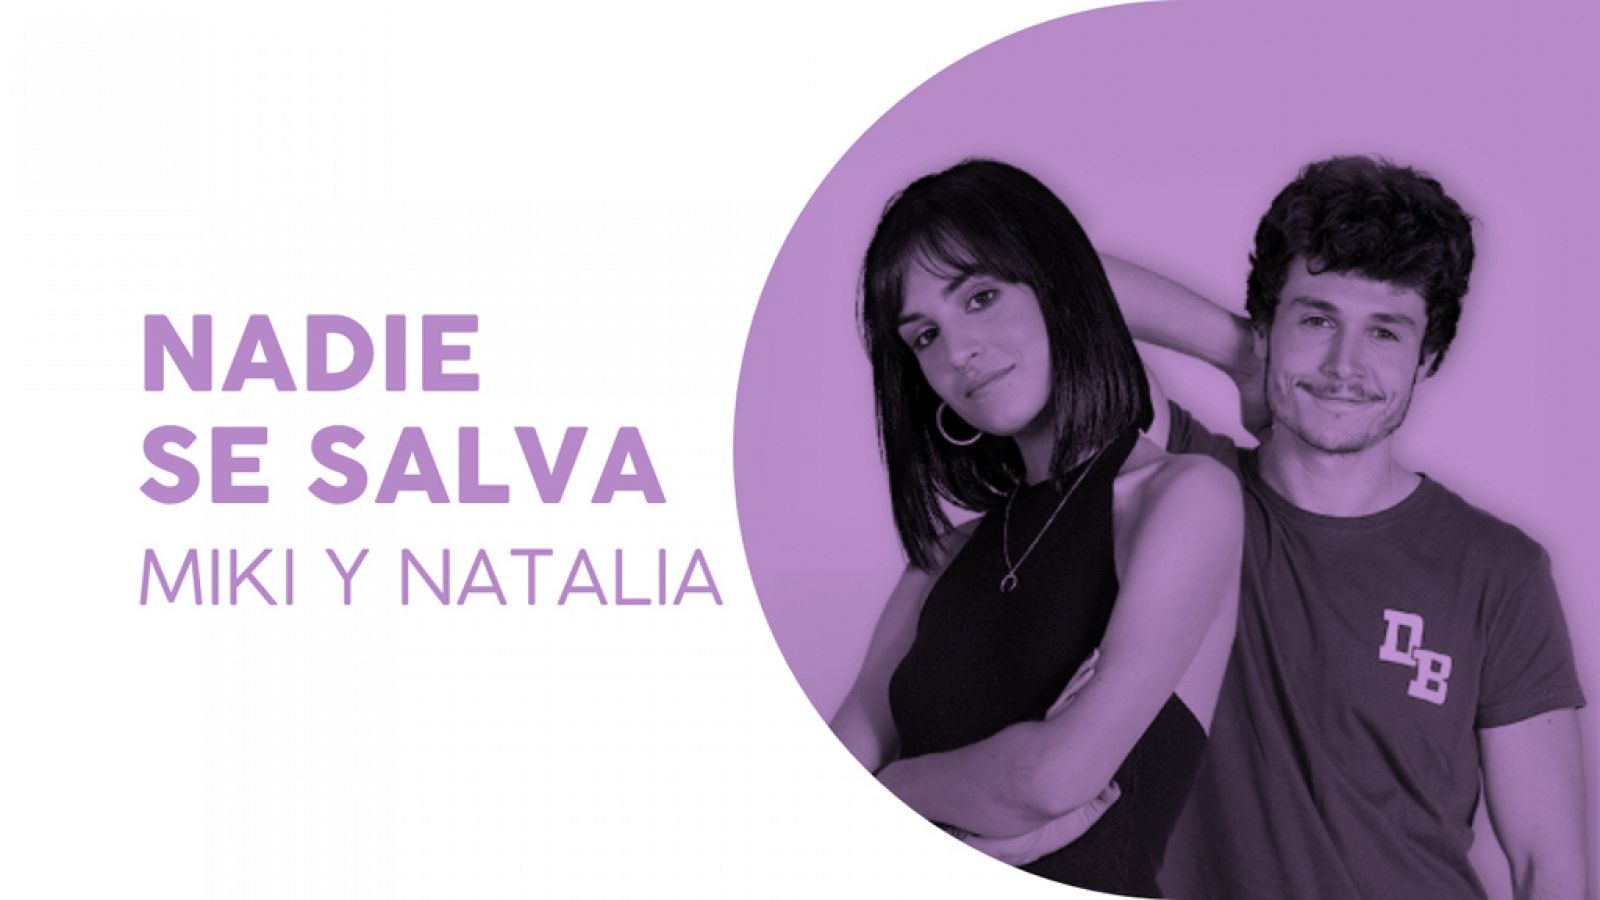 Eurovisión 2019 - Eurotemazo: Miki y Natalia cantan "Nadie se salva"